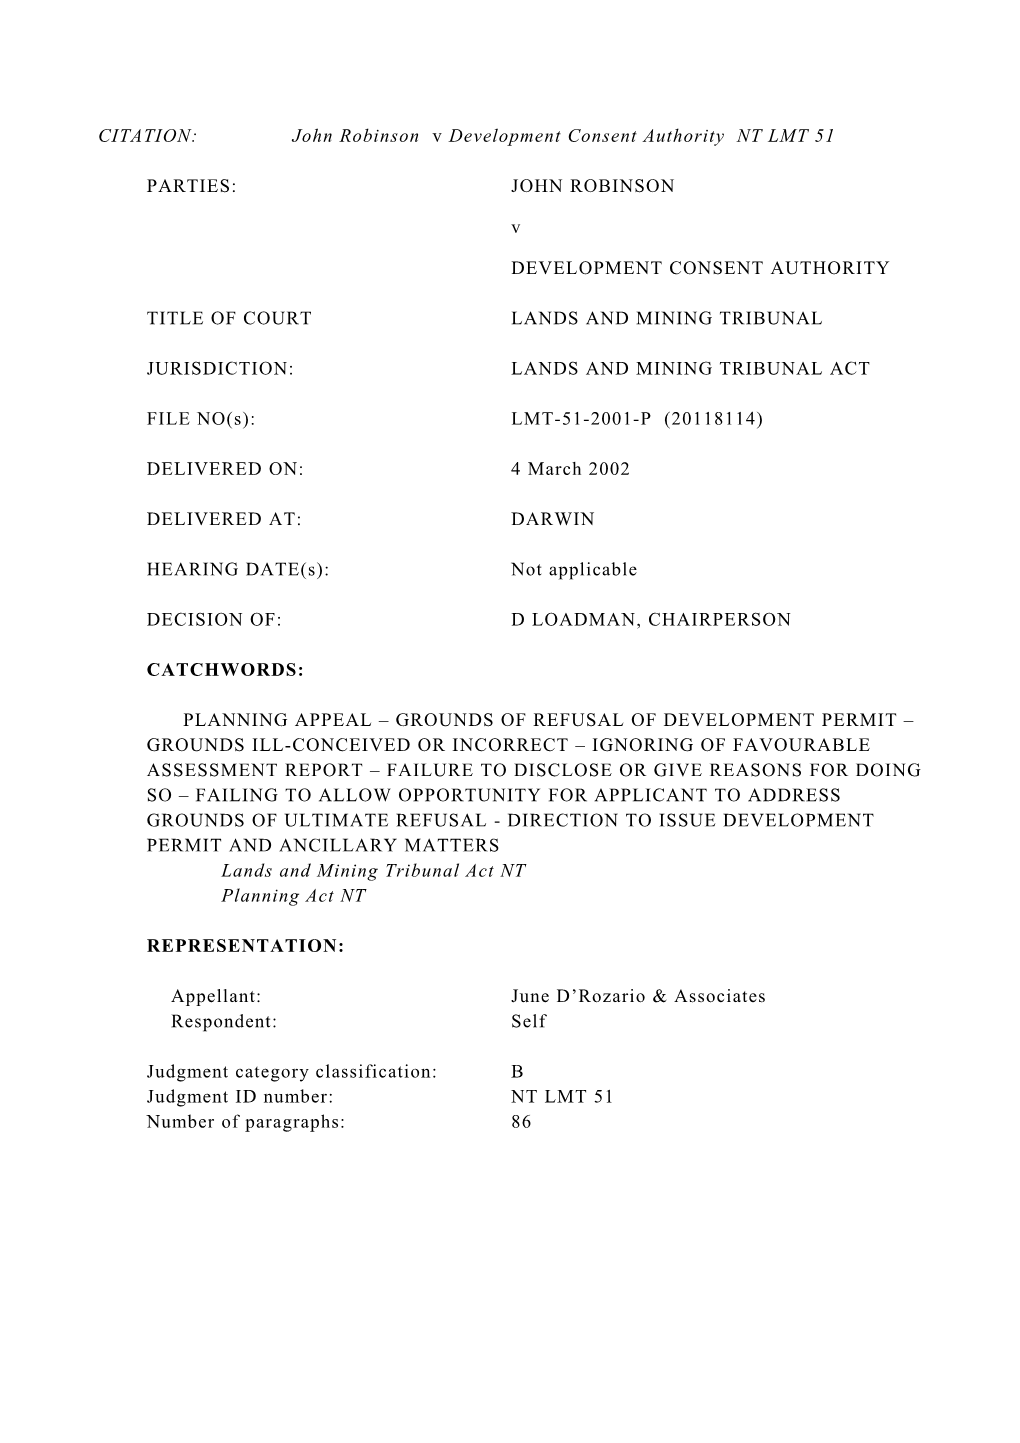 CITATION: John Robinson V Development Consent Authority NT LMT 51